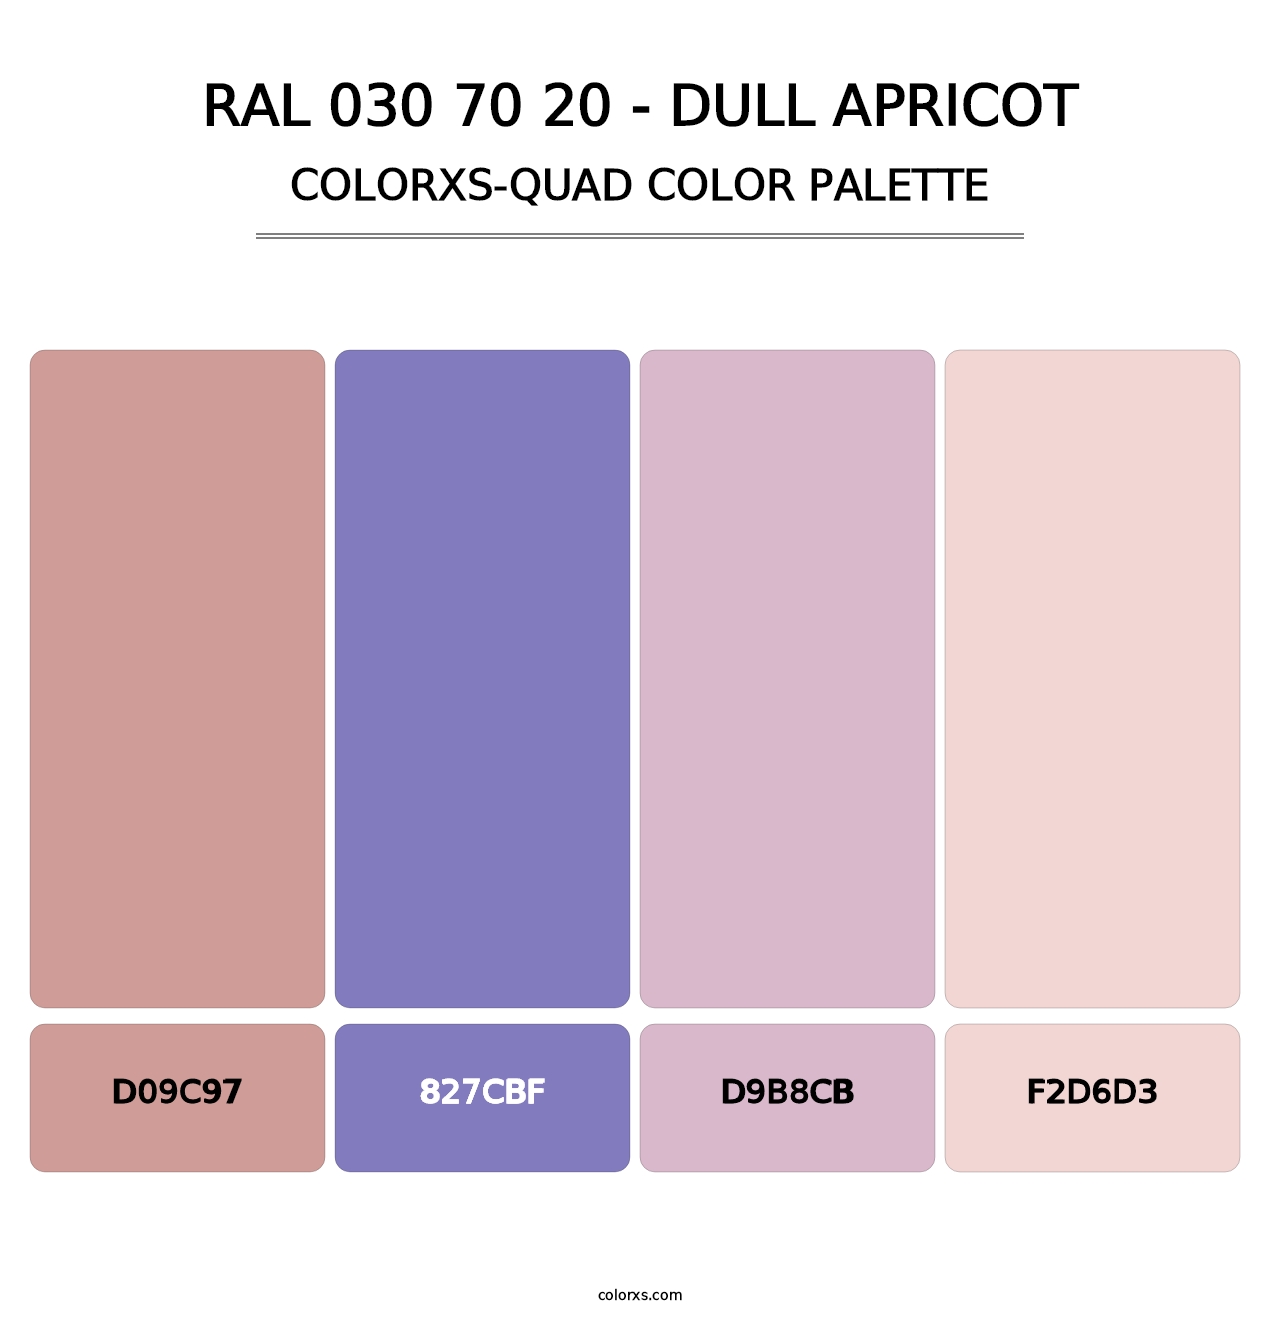 RAL 030 70 20 - Dull Apricot - Colorxs Quad Palette